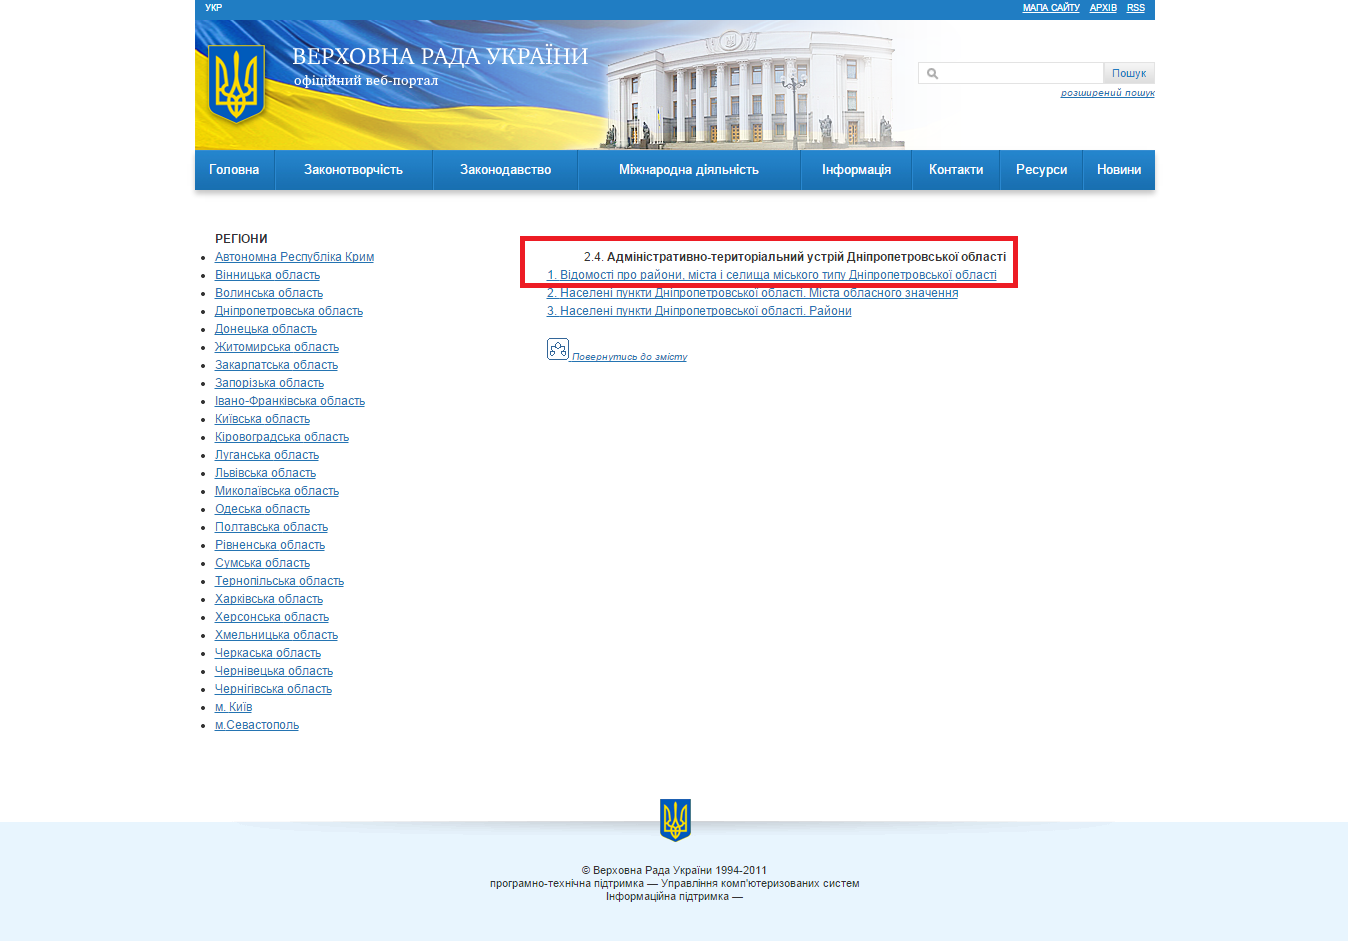 http://static.rada.gov.ua/zakon/new/NEWSAIT/ADM/zmistdni.html